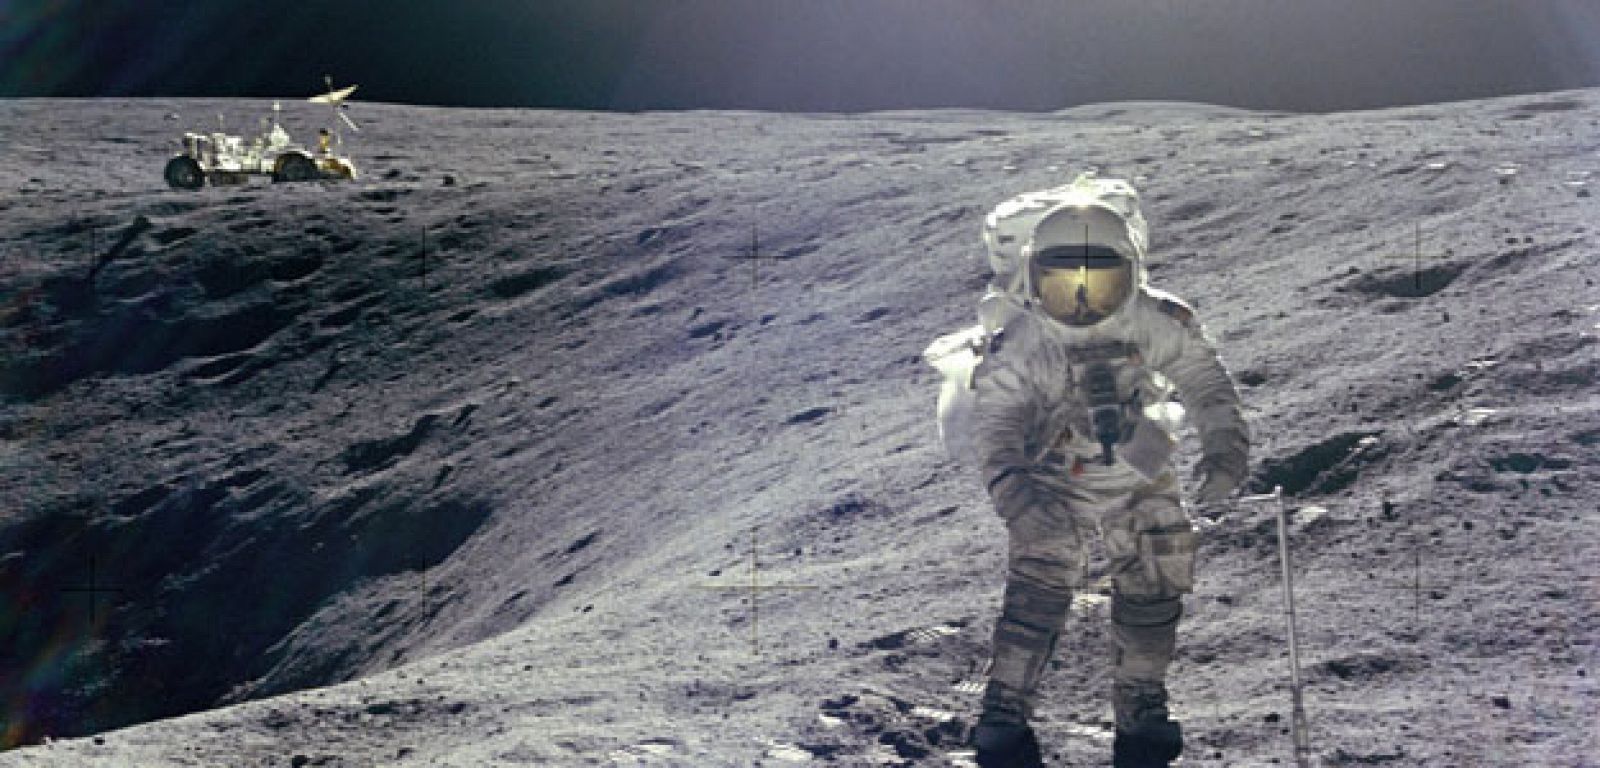 Charles Duke, piloto del Apolo 16, fotografiado recogiendo pruebas de la superficie lunar.